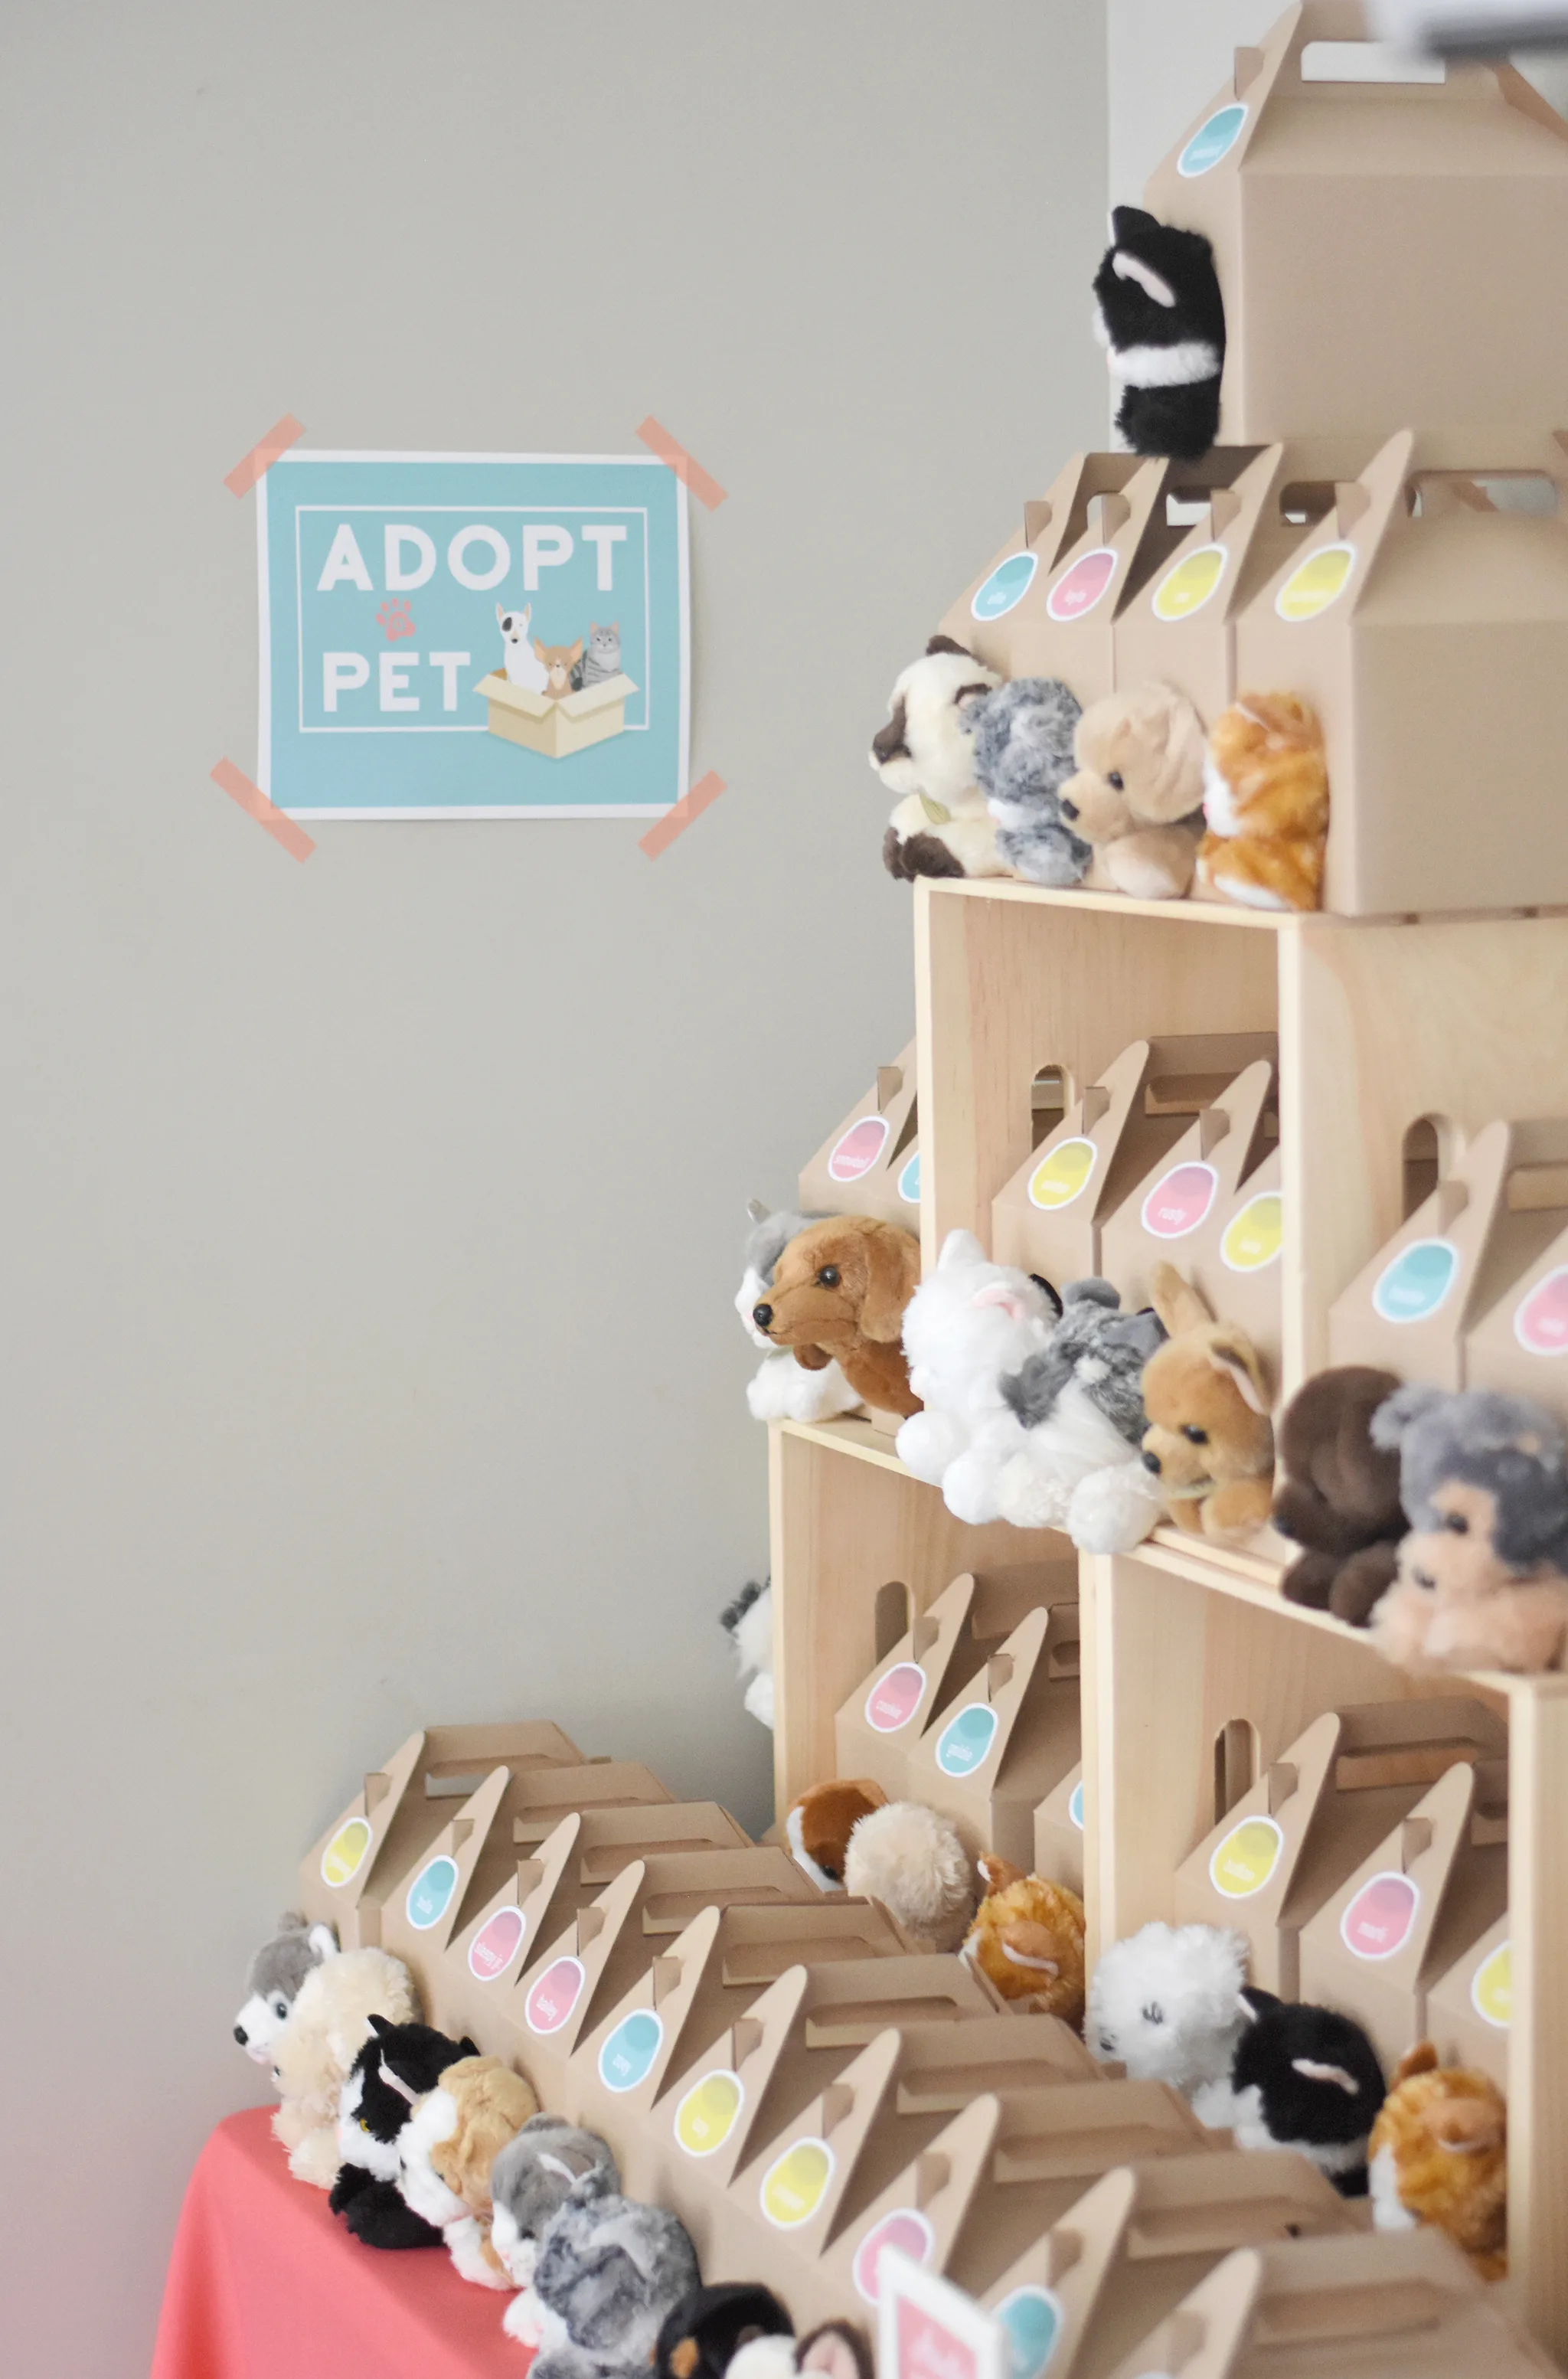 Adopt a pet party favors!